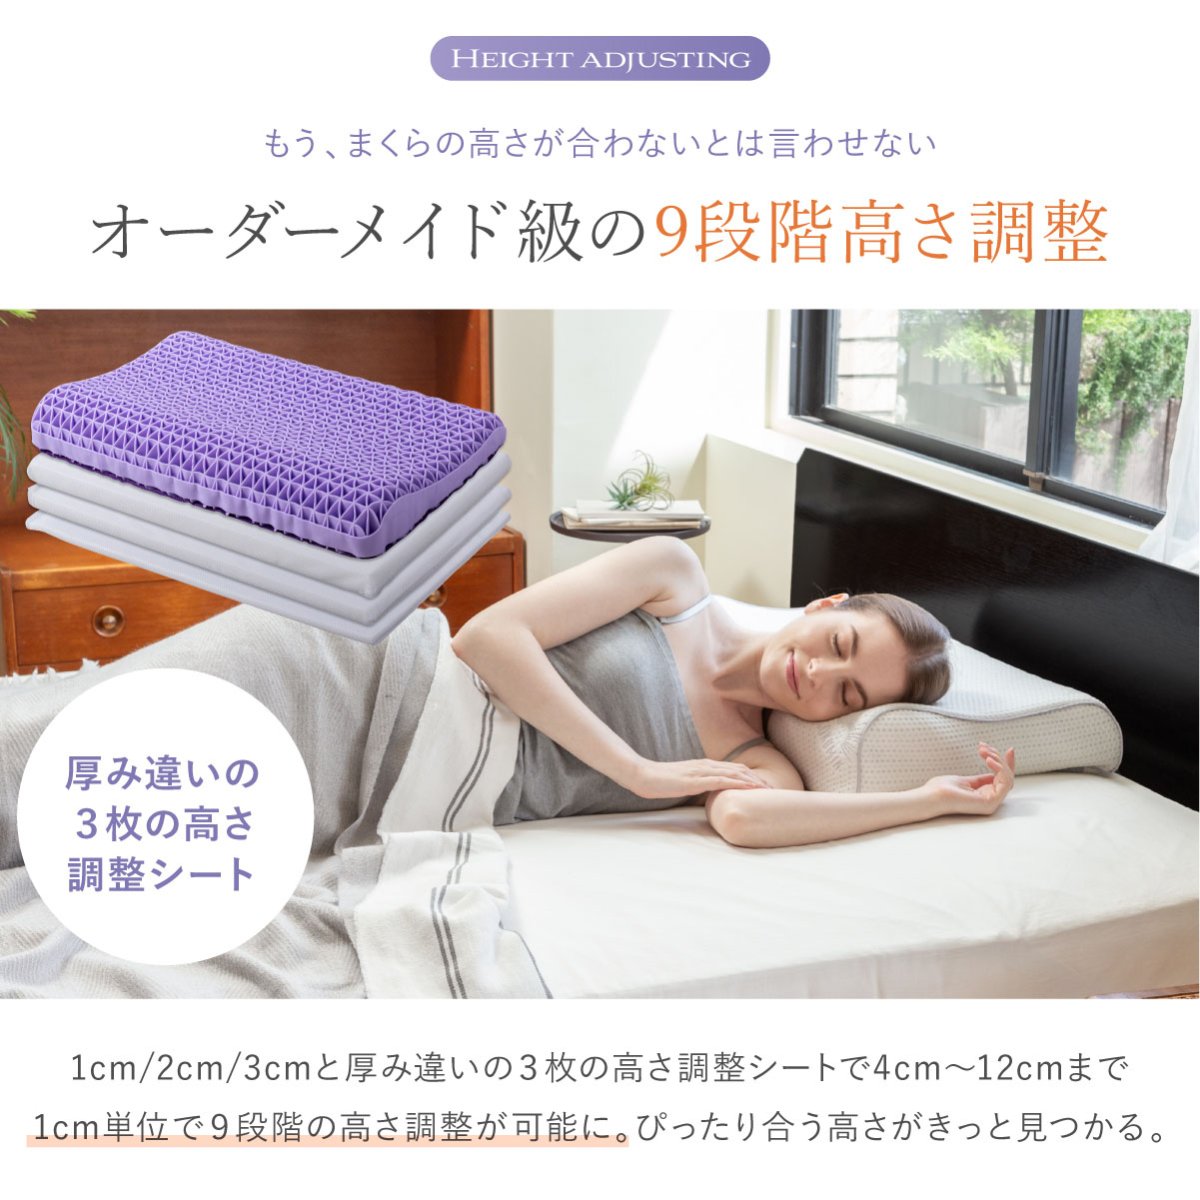 Takumi 無重力ジェルピロー グランデ 枕であなたの悩みを解決 GOKUMIN(極眠)